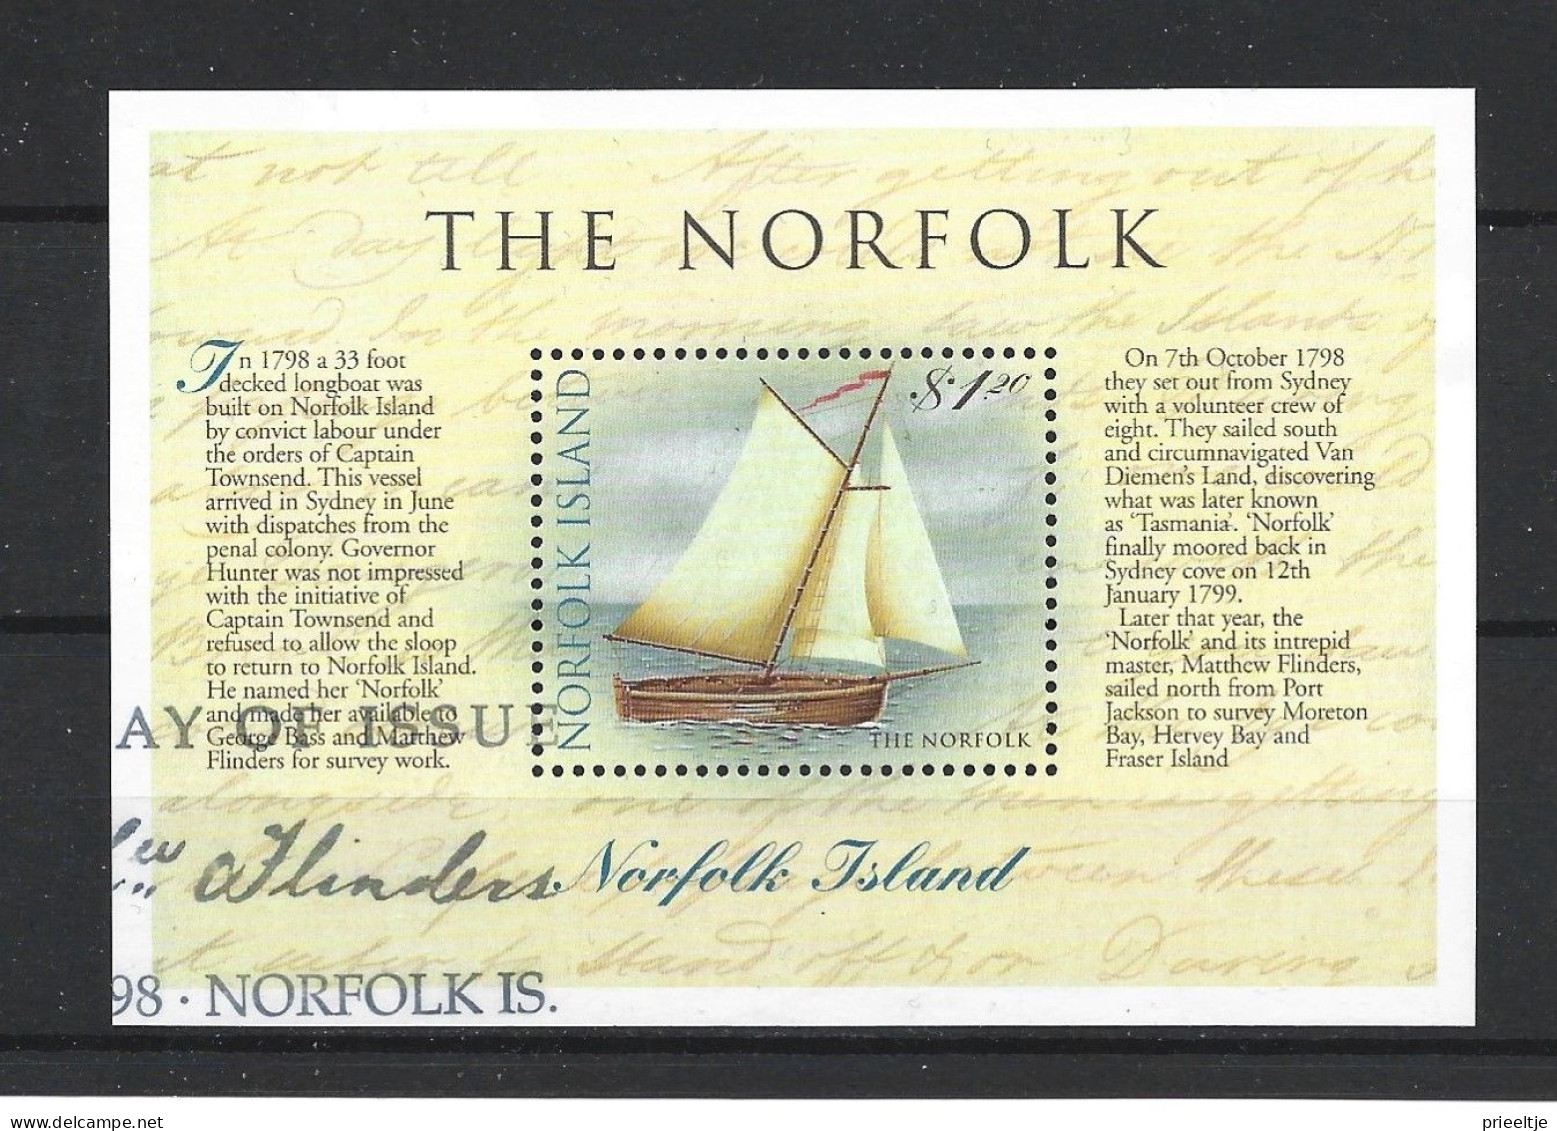 Norfolk 1998 Construction Of 'The Norfolk' Bicentenary  S/S Y.T. BF 29  (0) - Norfolk Island